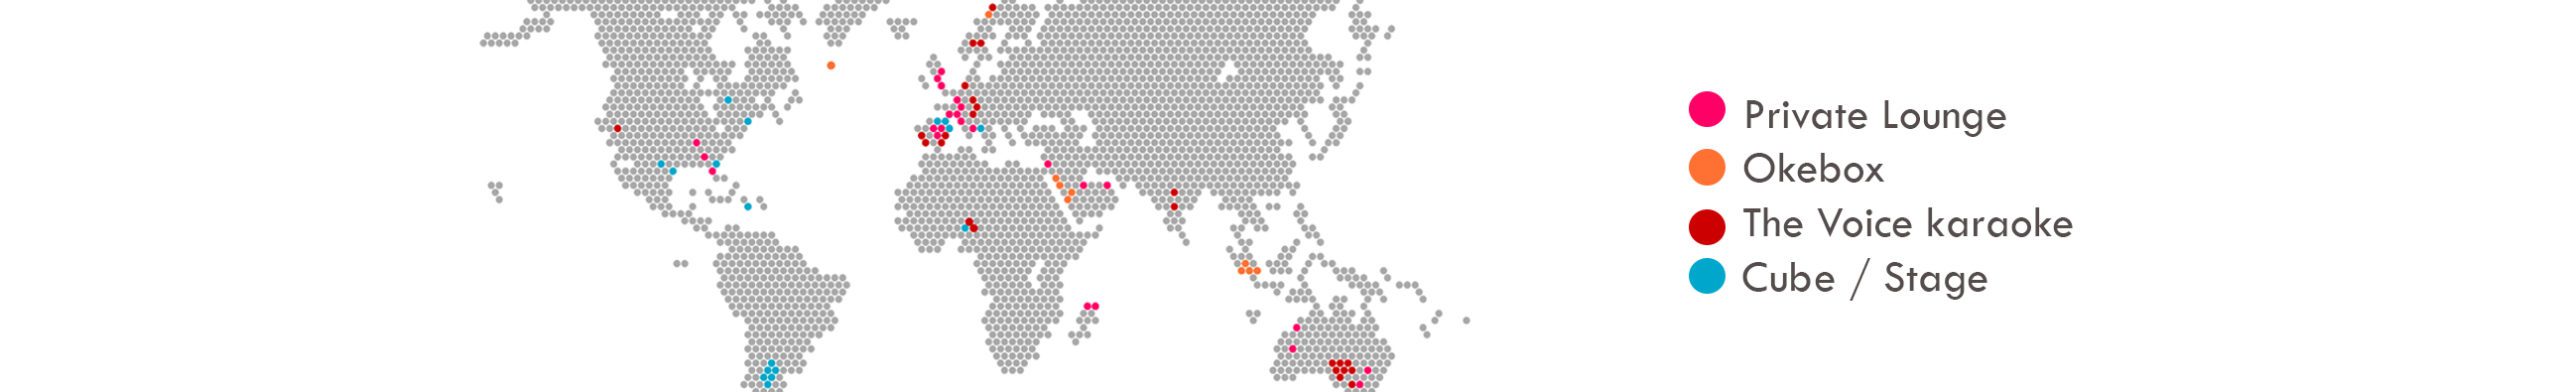 mapa mundo con nuestras localizaziones